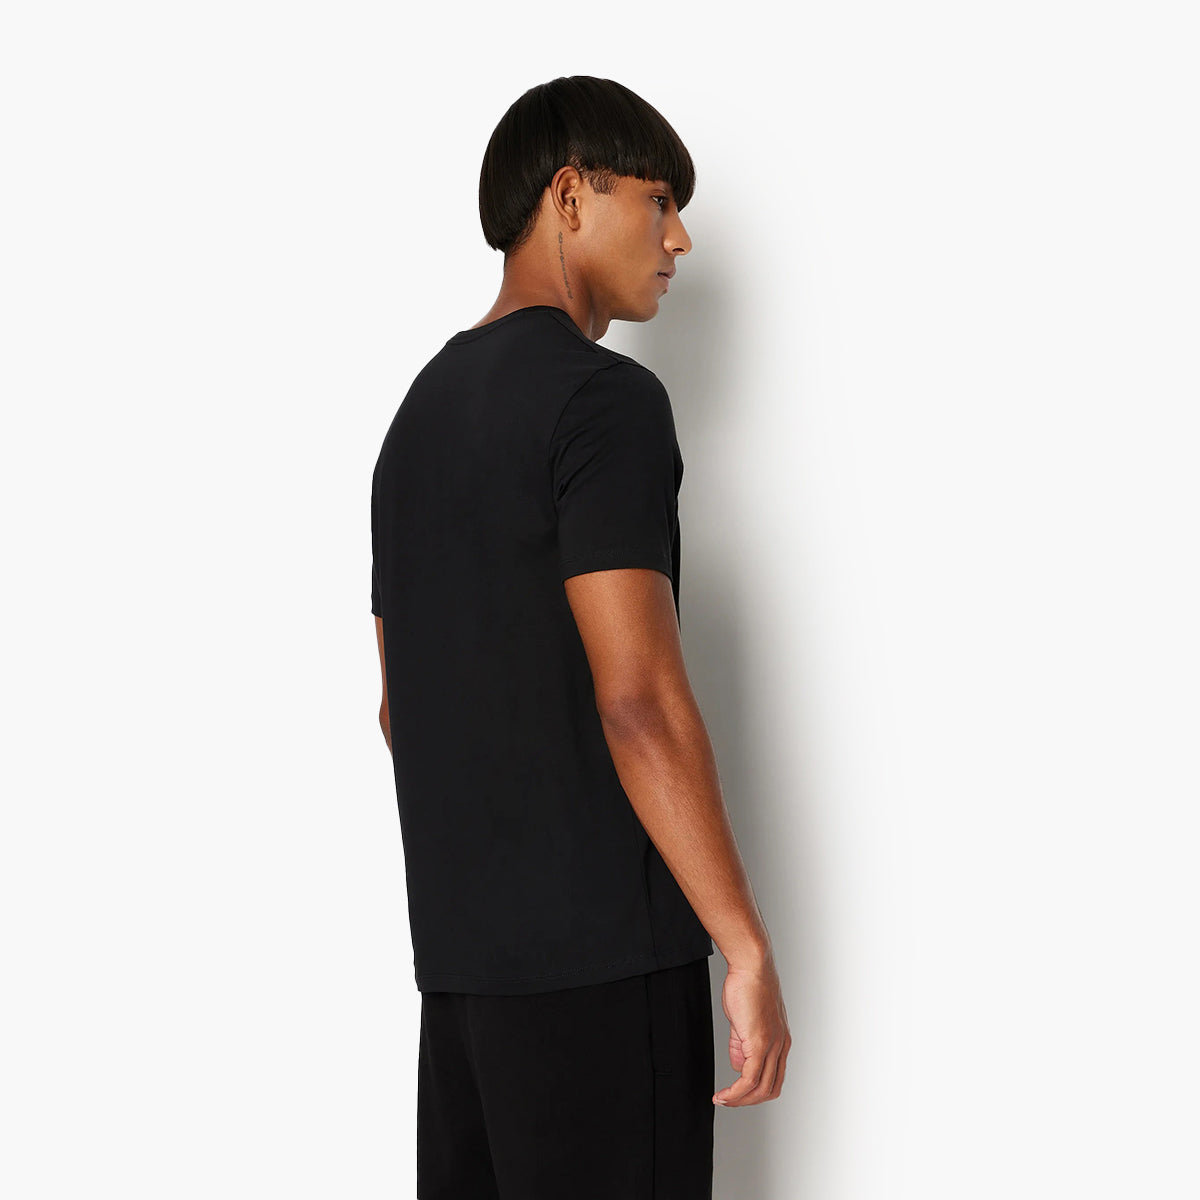 Armani Exchange Milano New York Regular Fit Jersey Cotton T-Shirt | LEVISONS